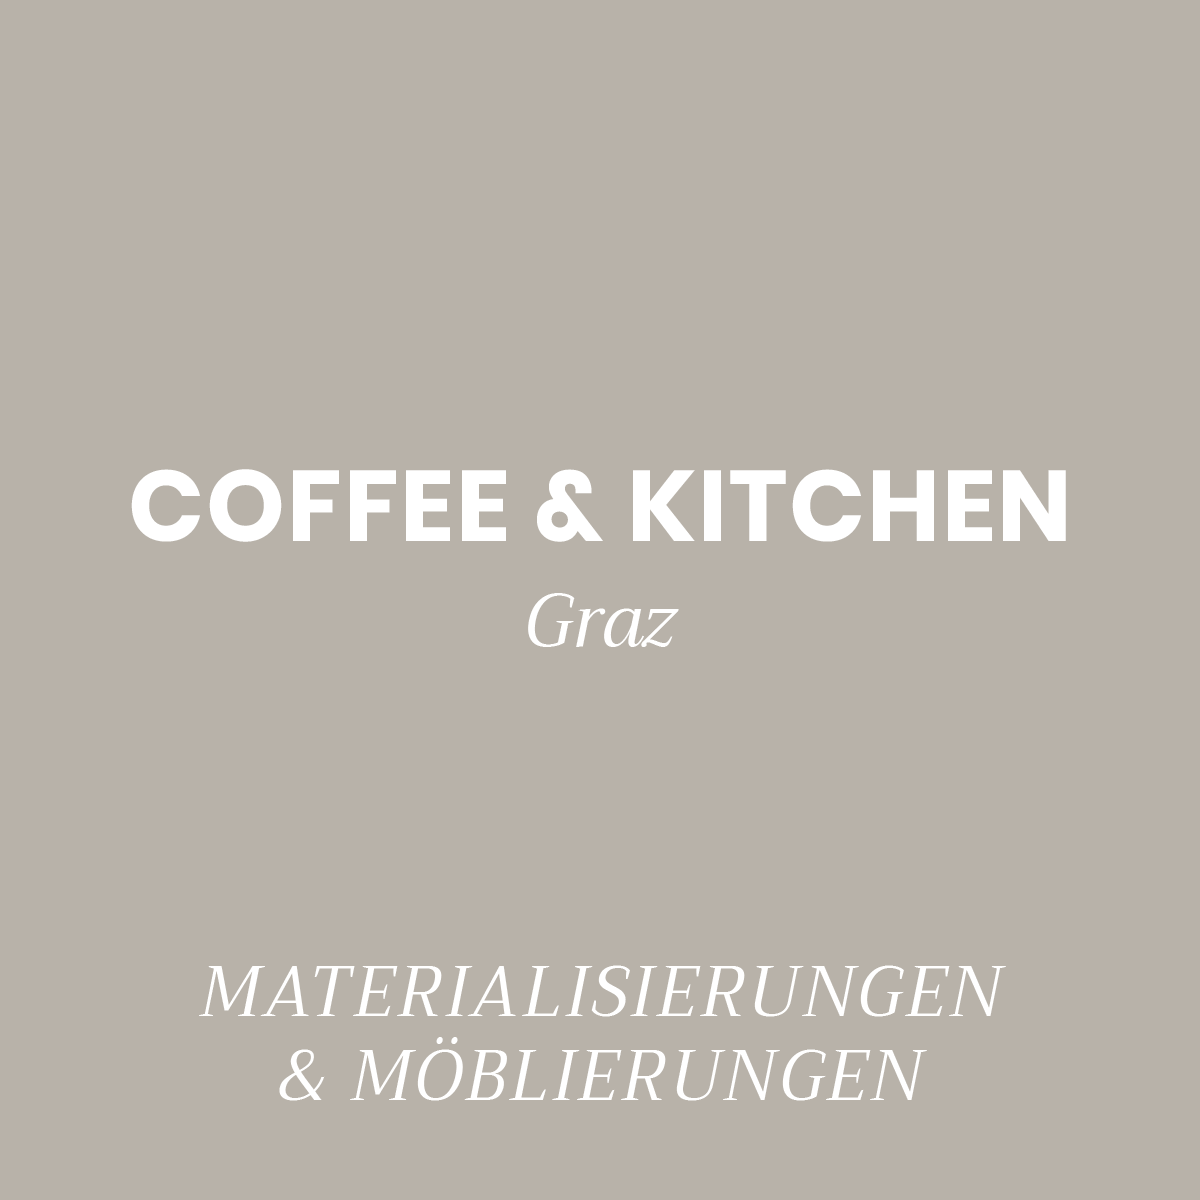 Kundenliste_1200x1200px-materialisierung-moeblierung-coffe-kitchen.png